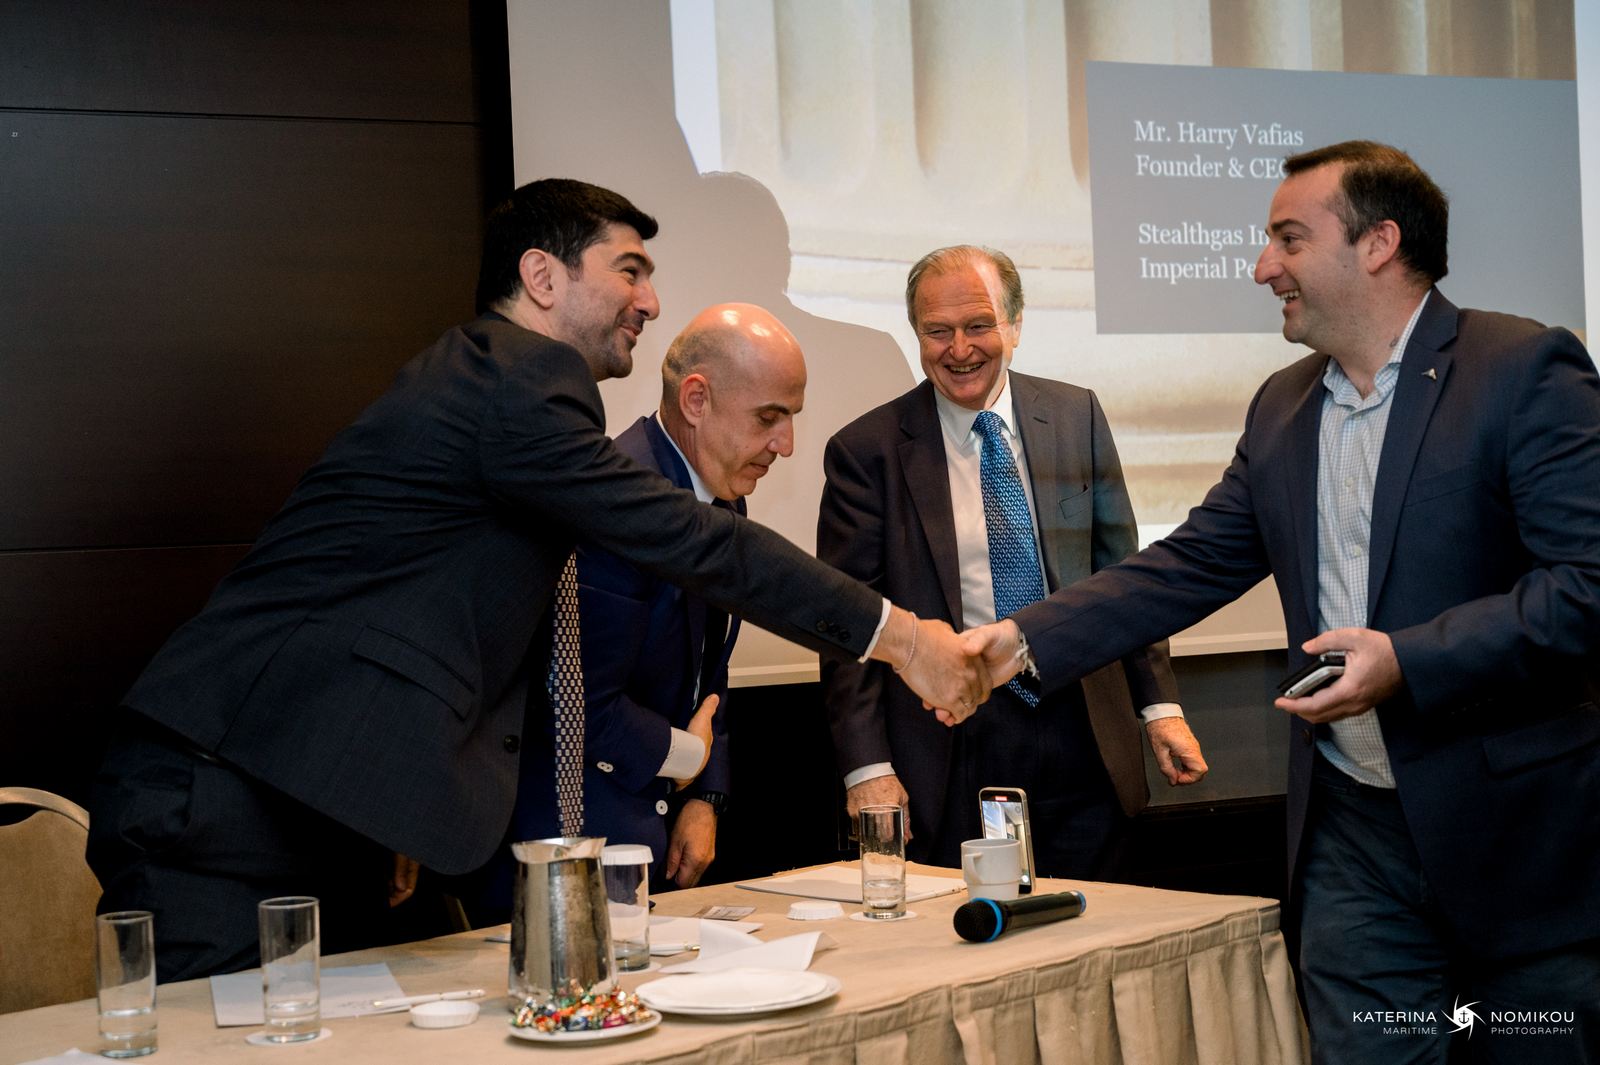 ONEGLOBAL & PENCO: Νέα στρατηγική επιχειρηματική συνεργασία στην Ελλάδα